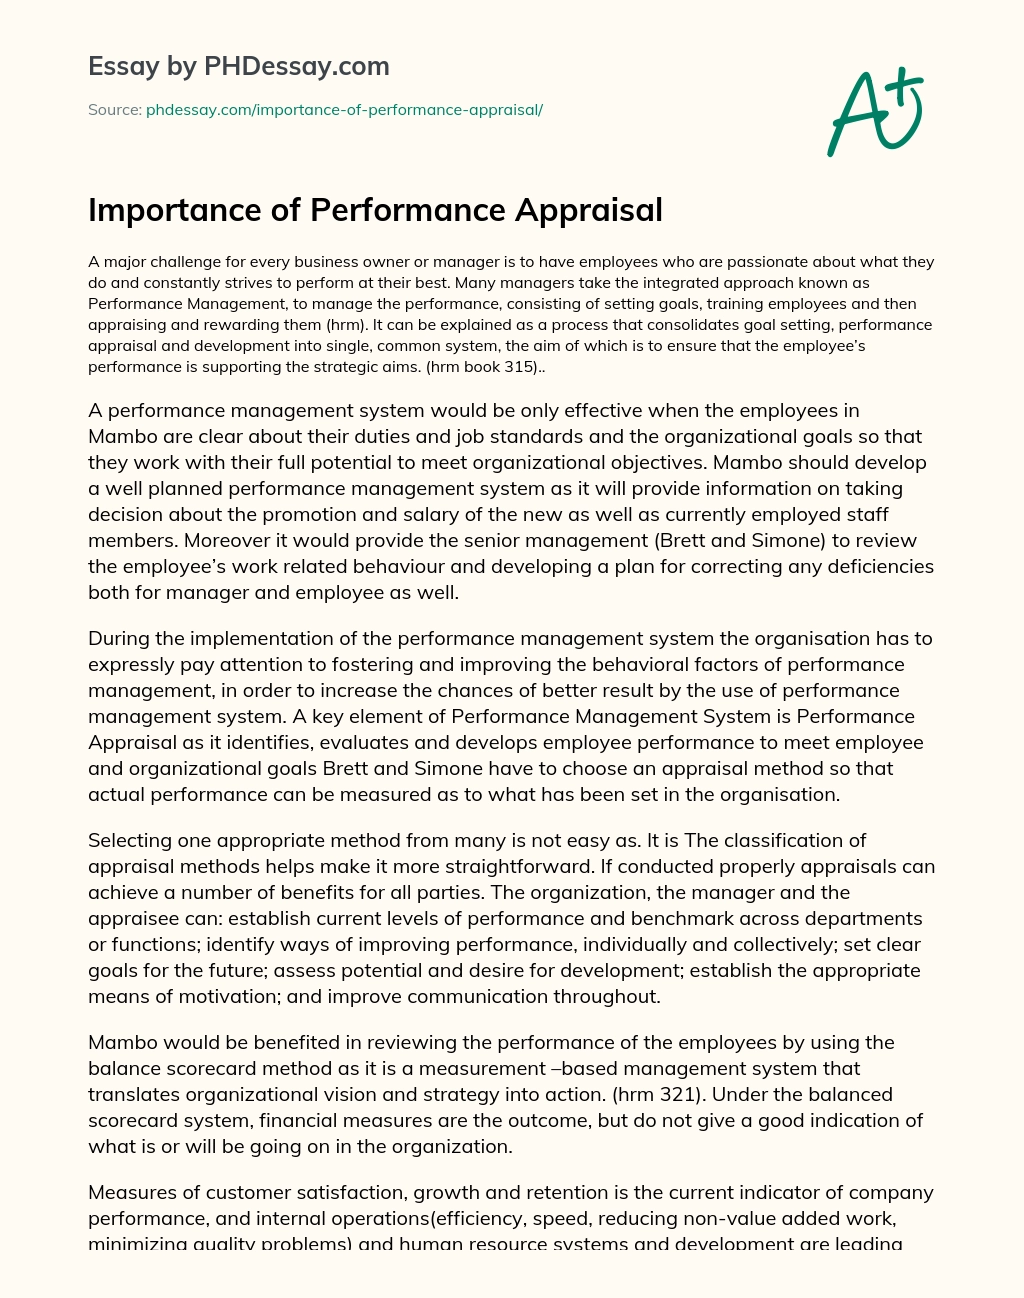 Importance of Performance Appraisal essay